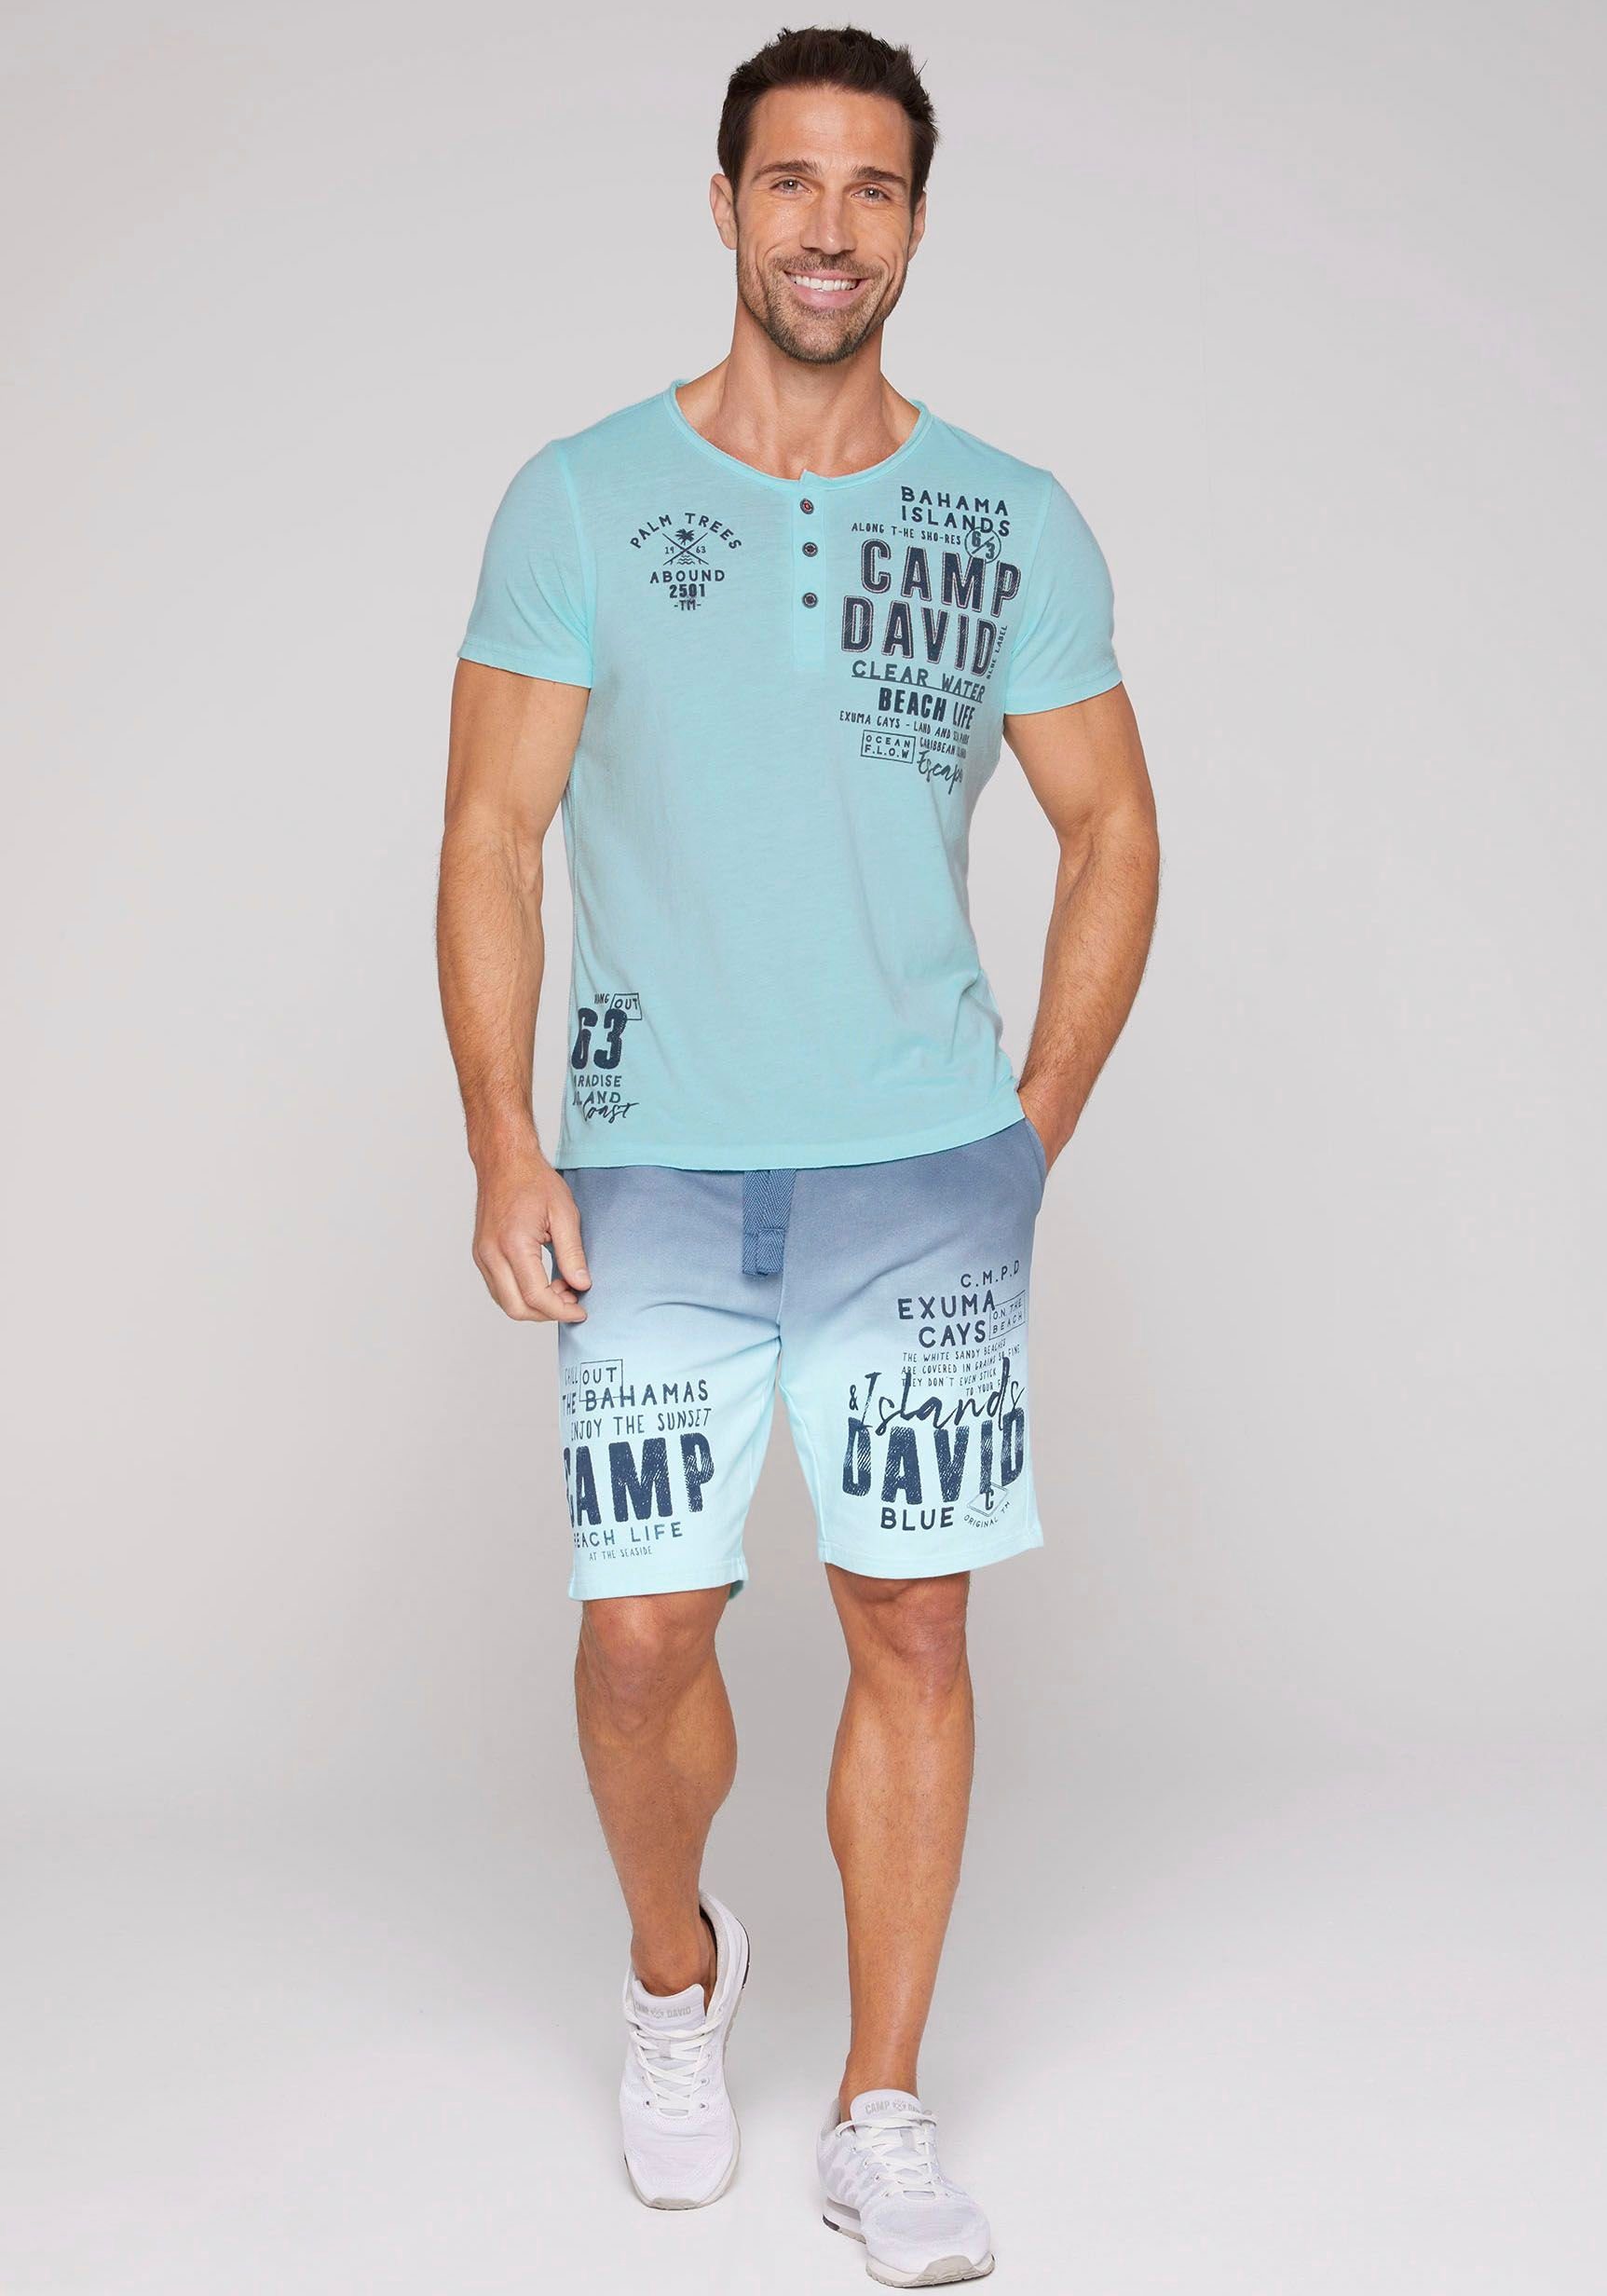 DAVID CAMP mint cool mit Kontrastnähten T-Shirt